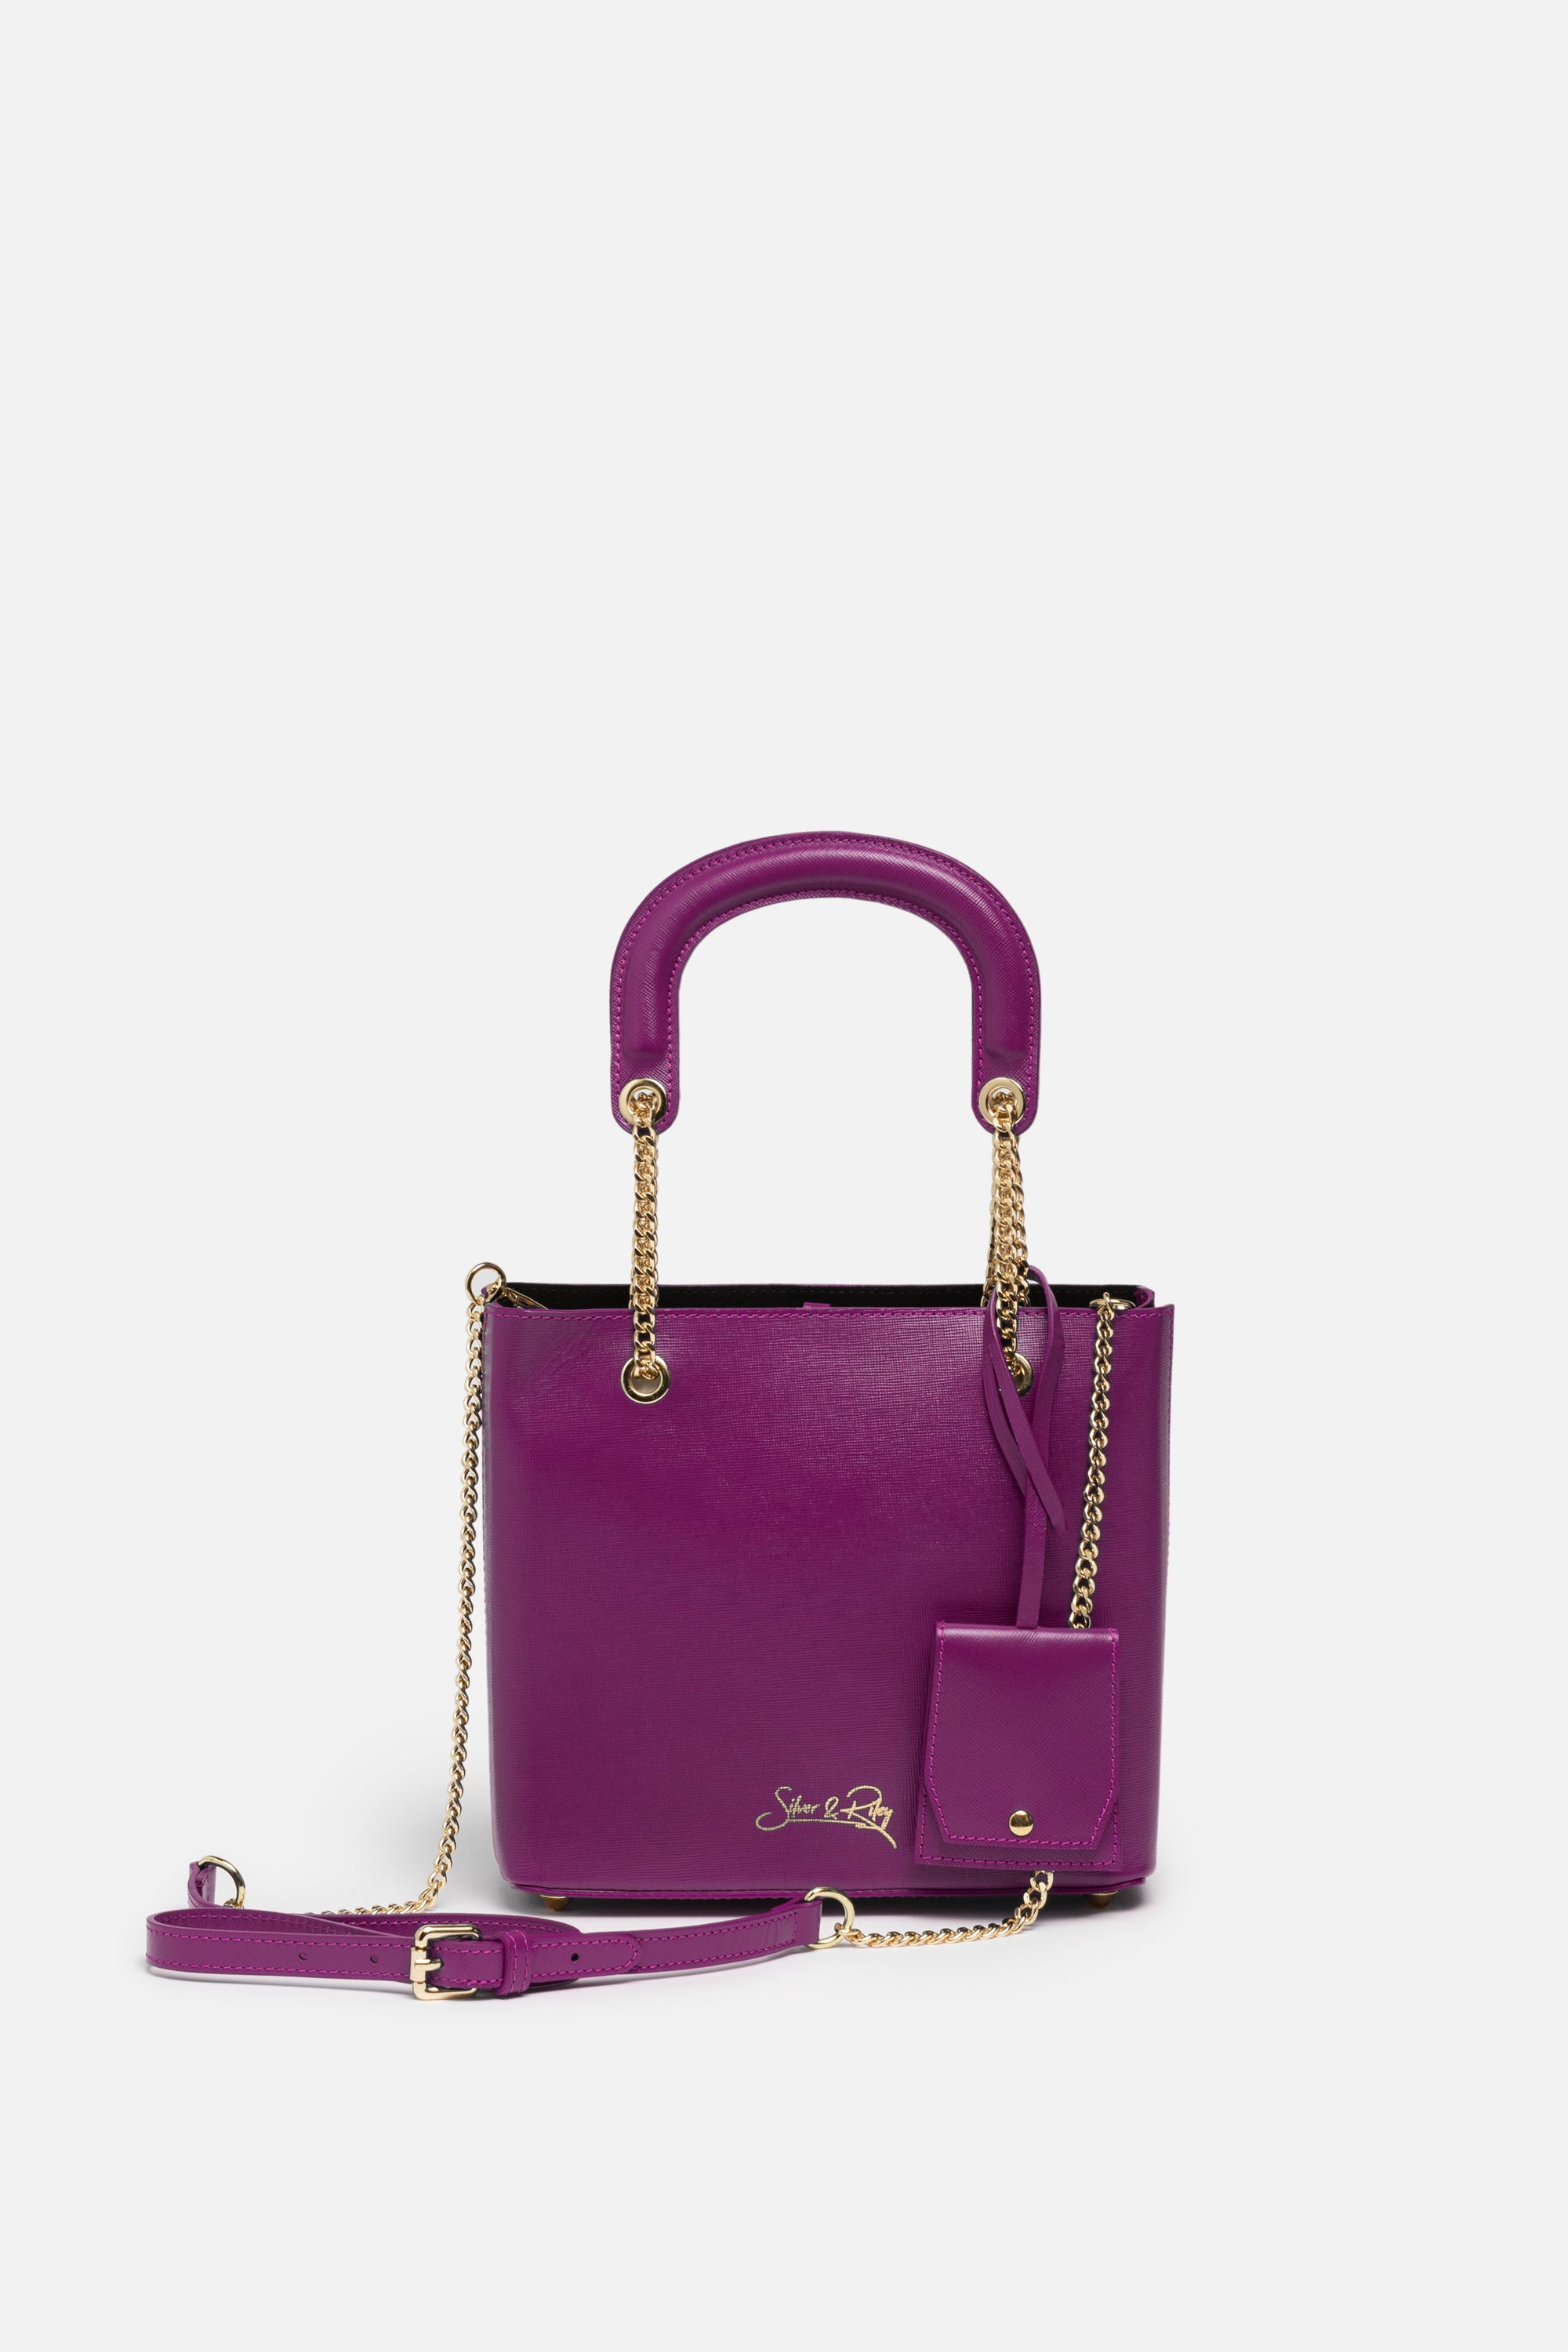 Durban Convertible Crossbody and Clutch Saffiano Leather Bag in Grape  Purple